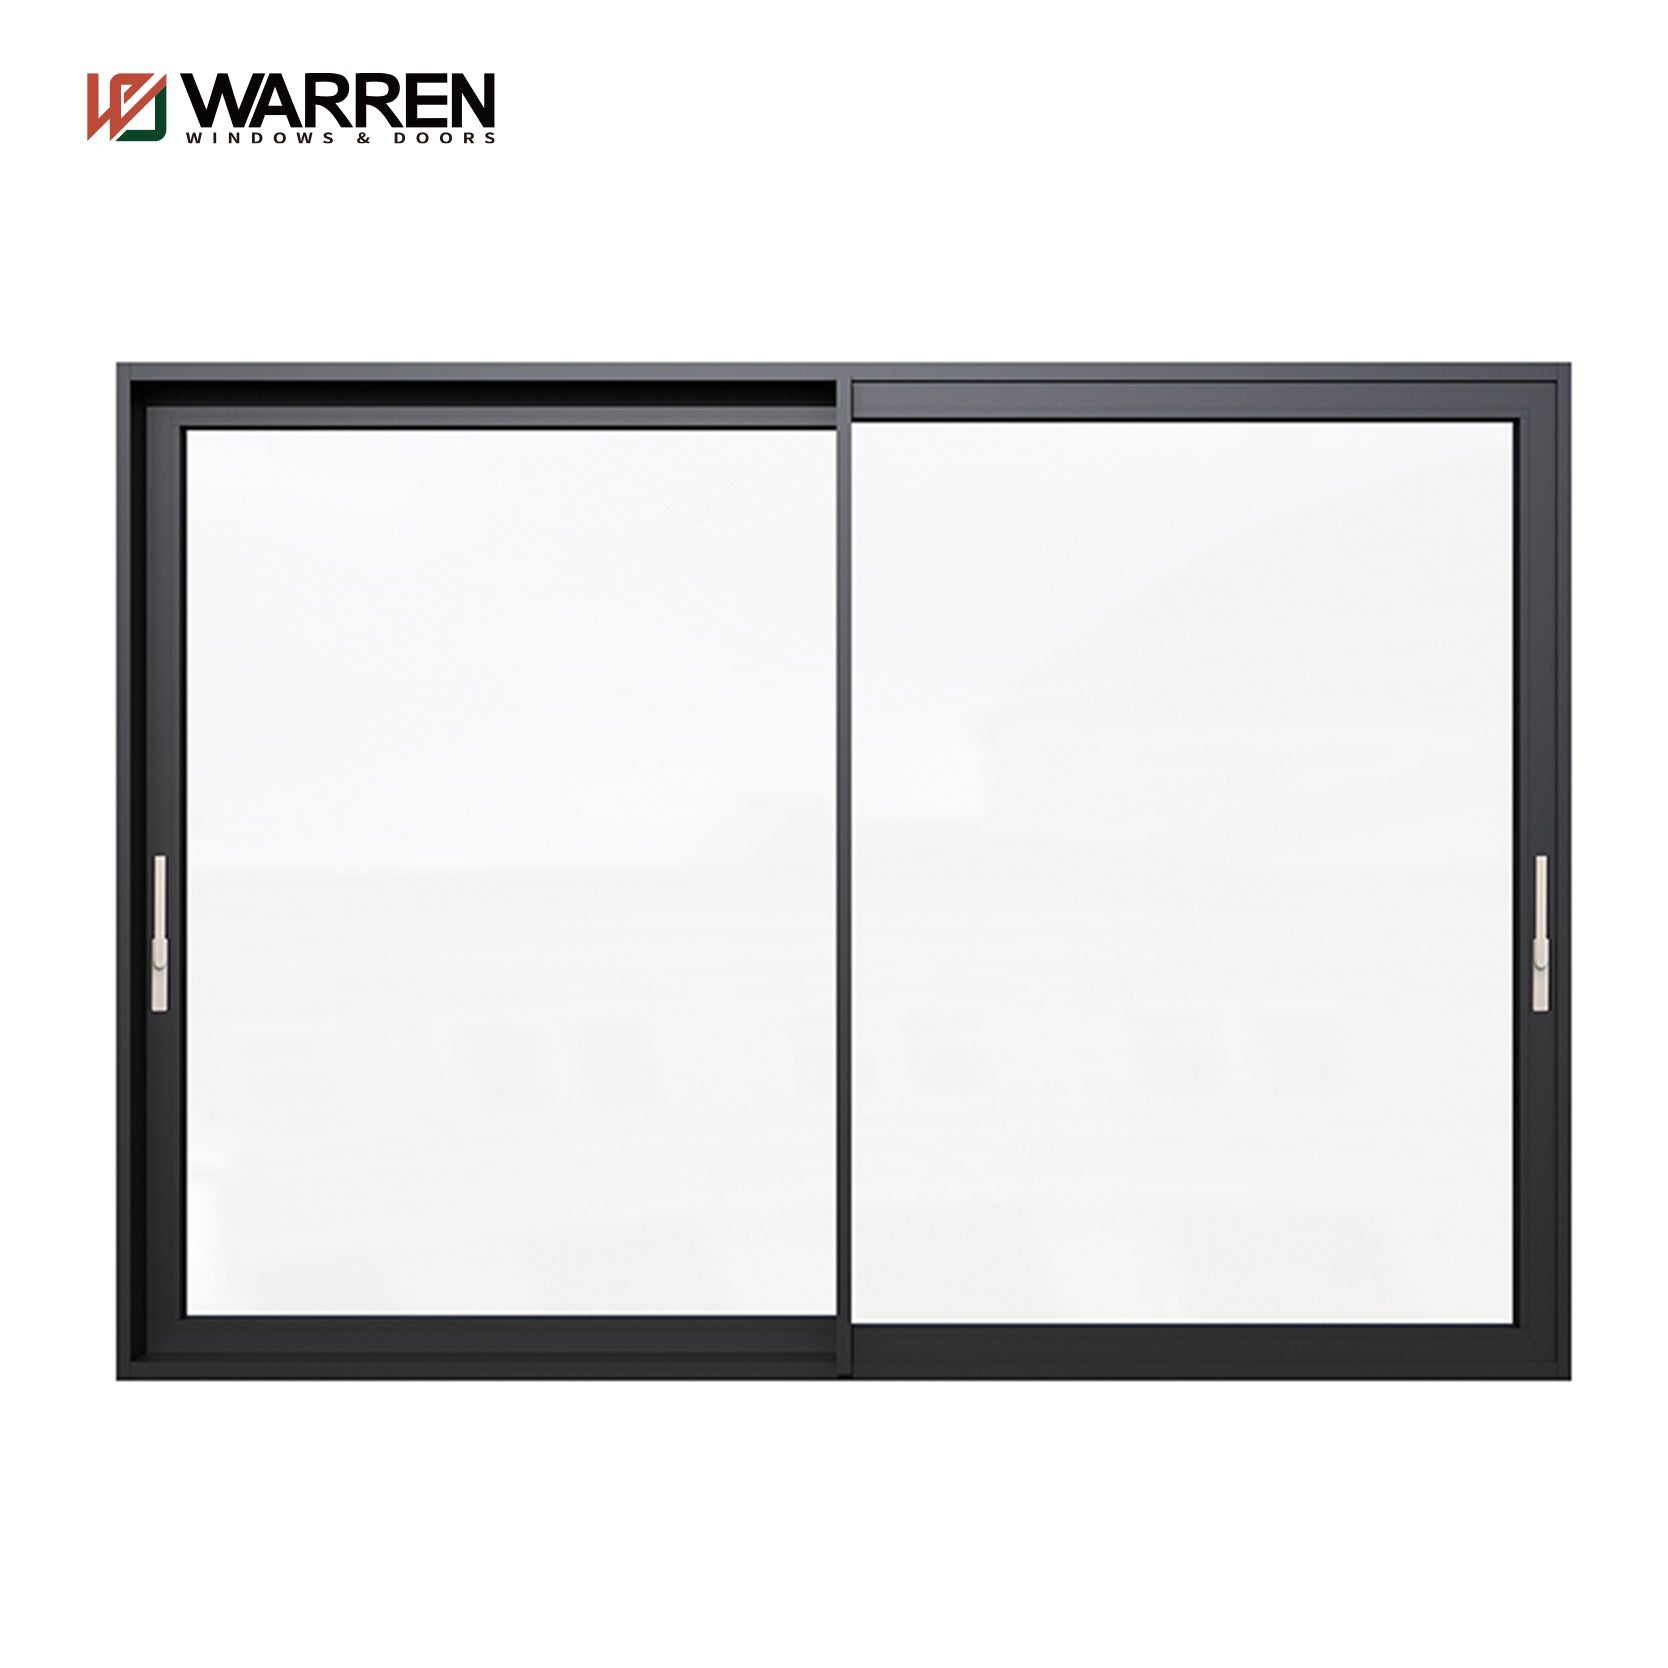 Warren China Custom Made High Quality Double Glass Aluminum Sliding Door Dual Rail Slim Lift And Sliding